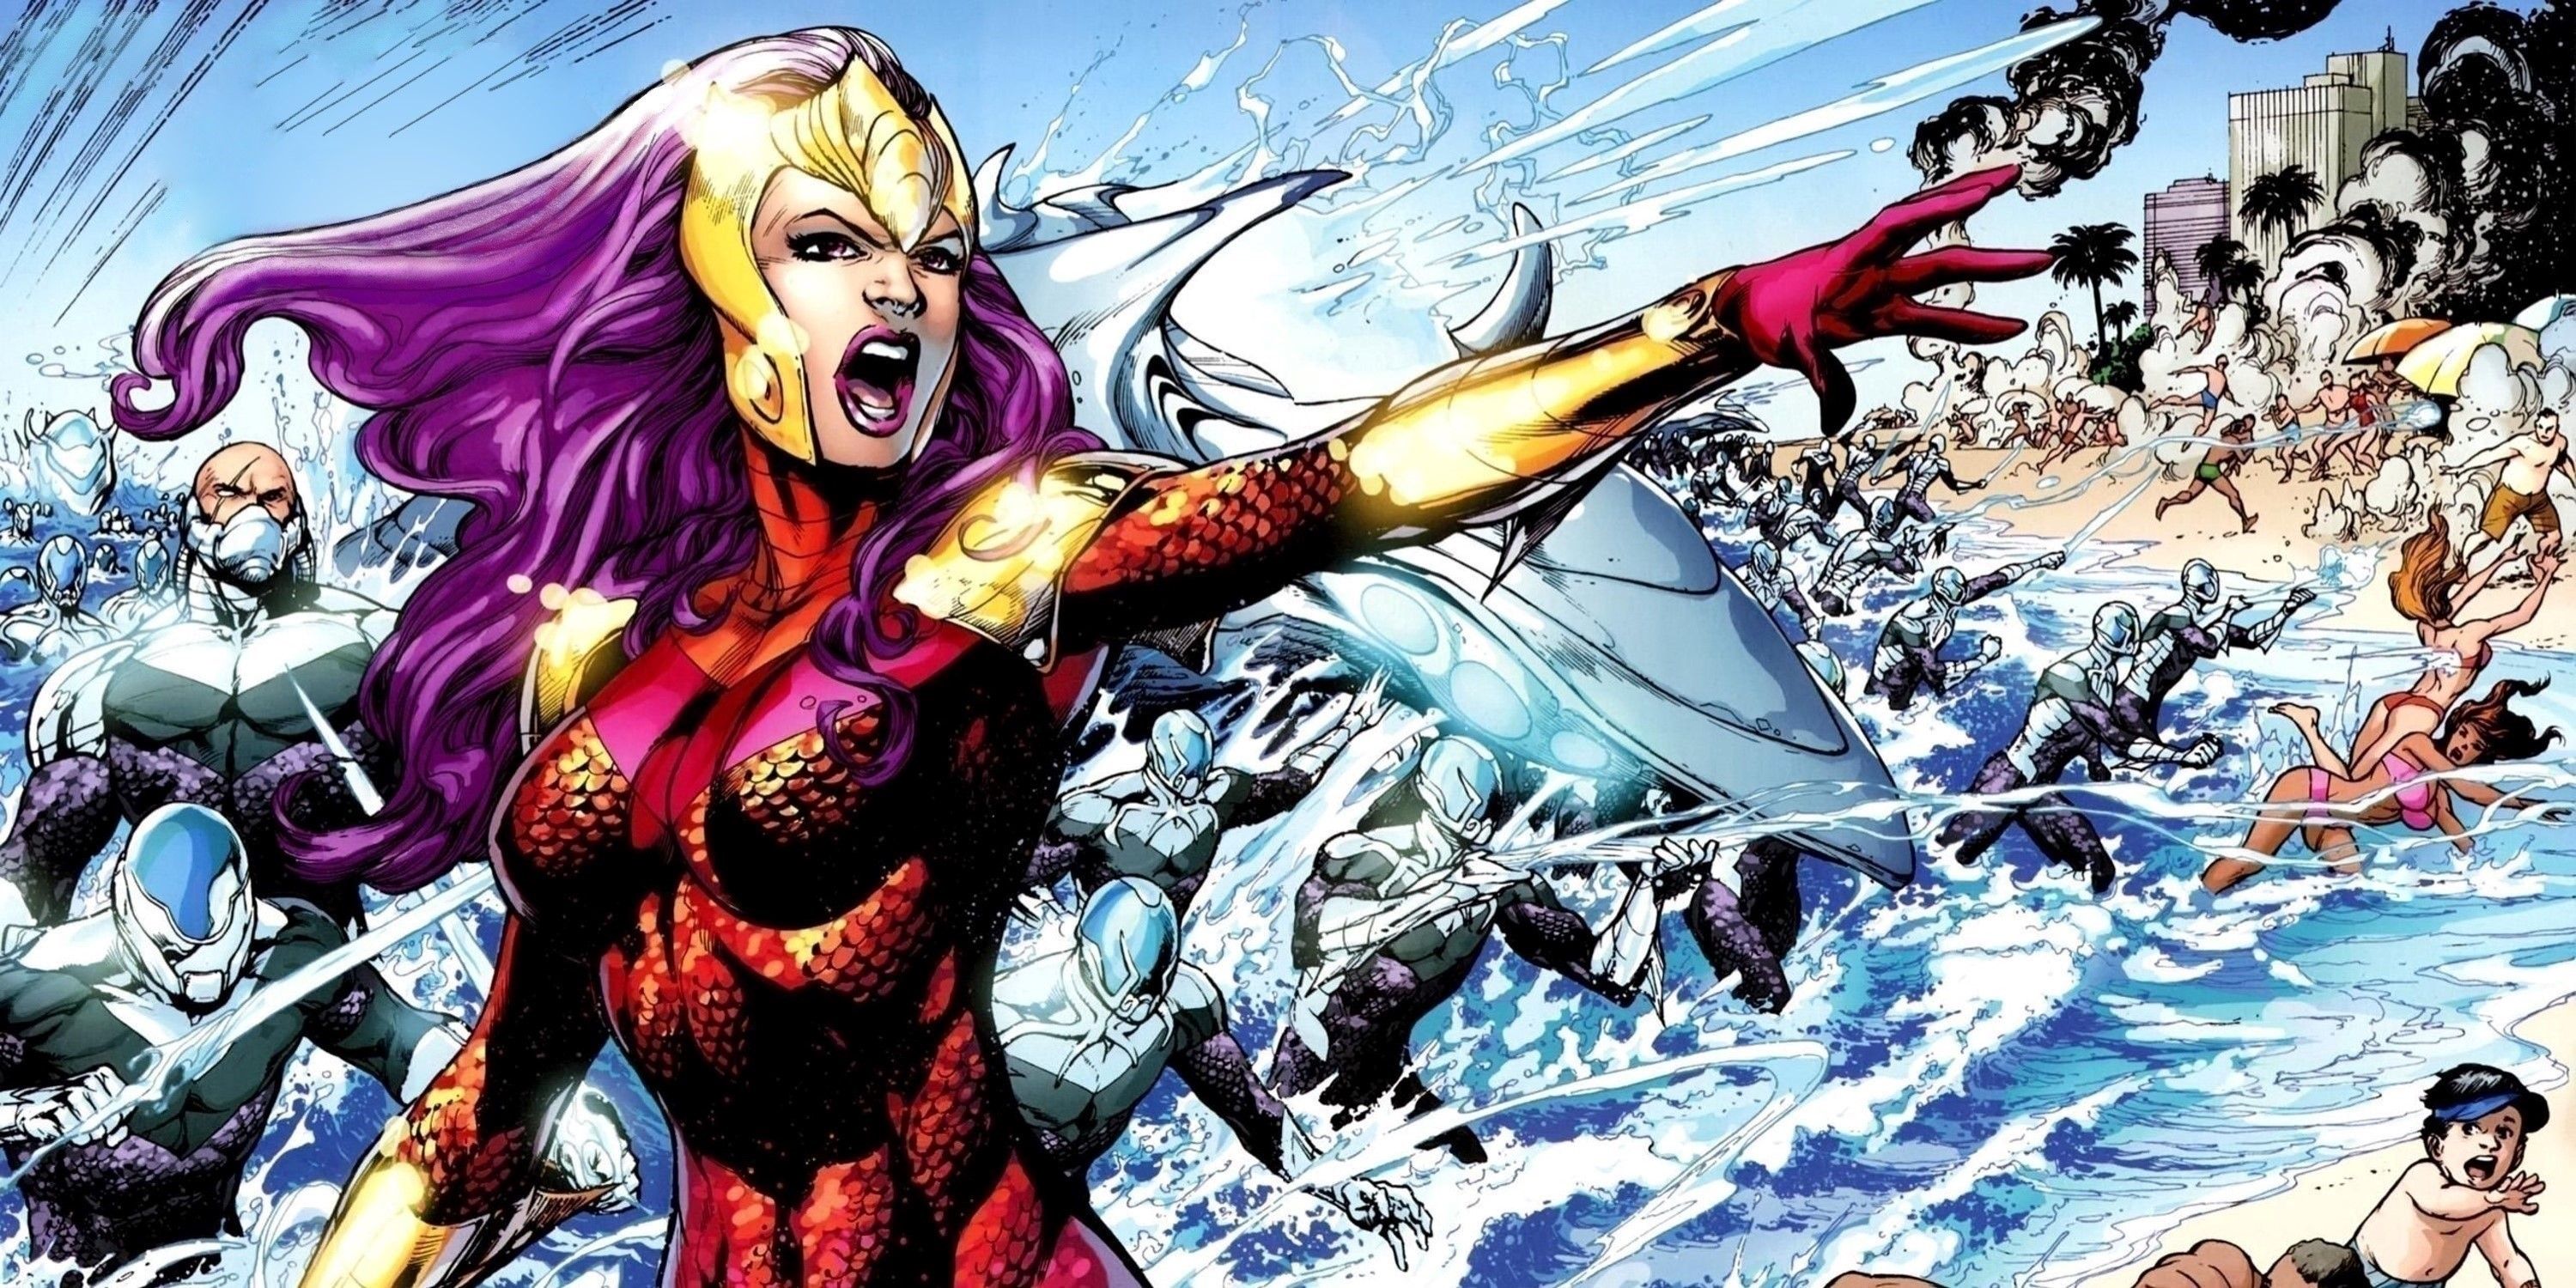 Siren (Hila) launches an attack against beachgoers in DC Comics